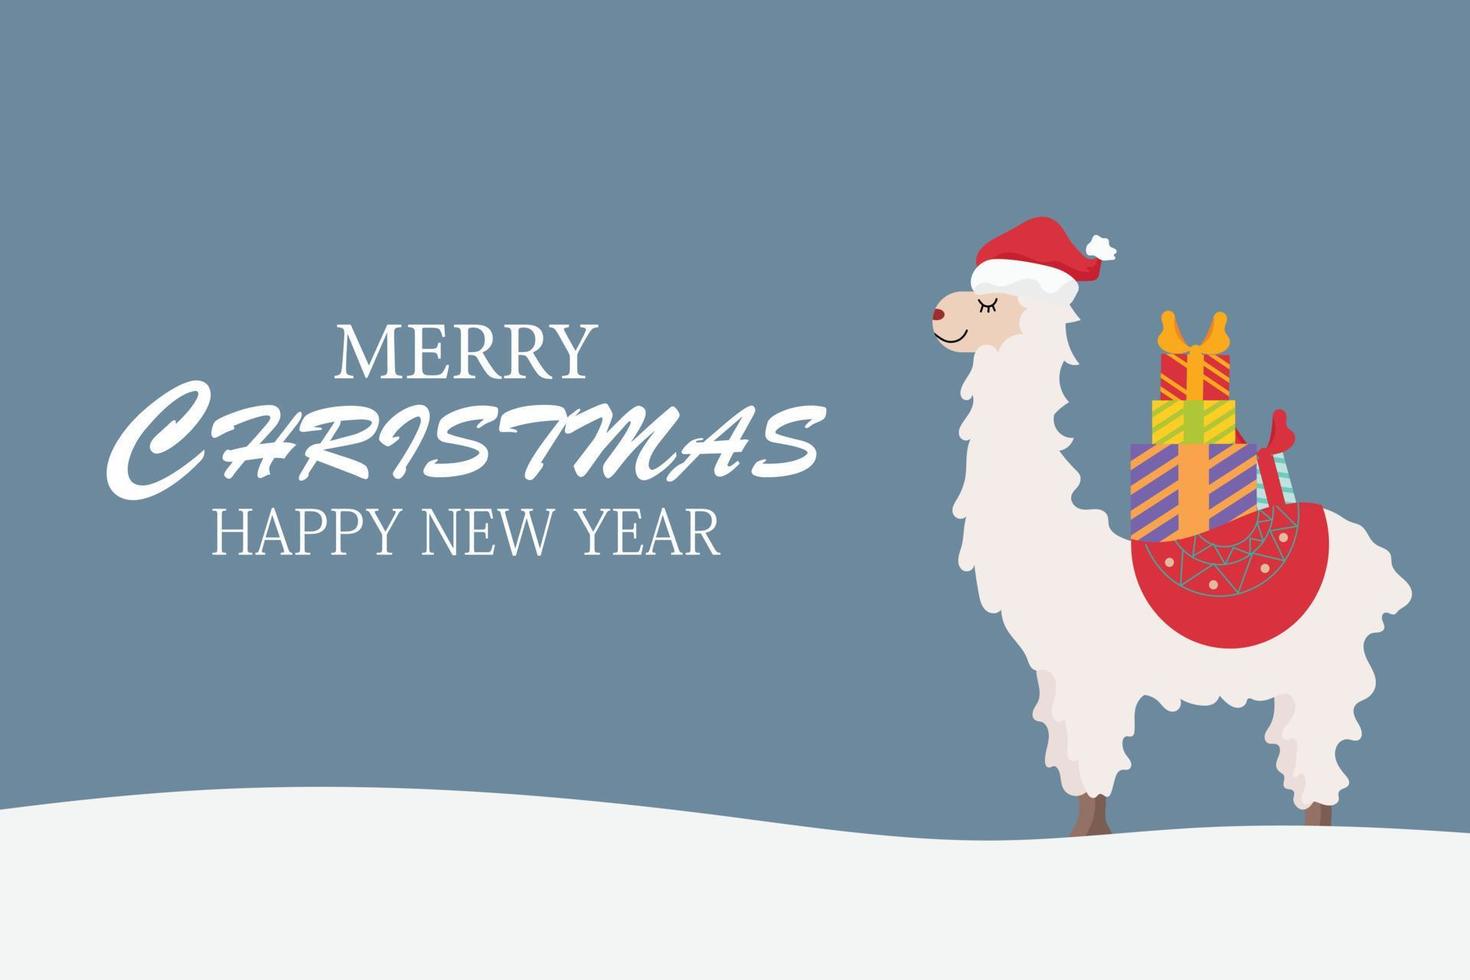 Merry Christmas and happy new year with cute llama cartoon character vector. vector